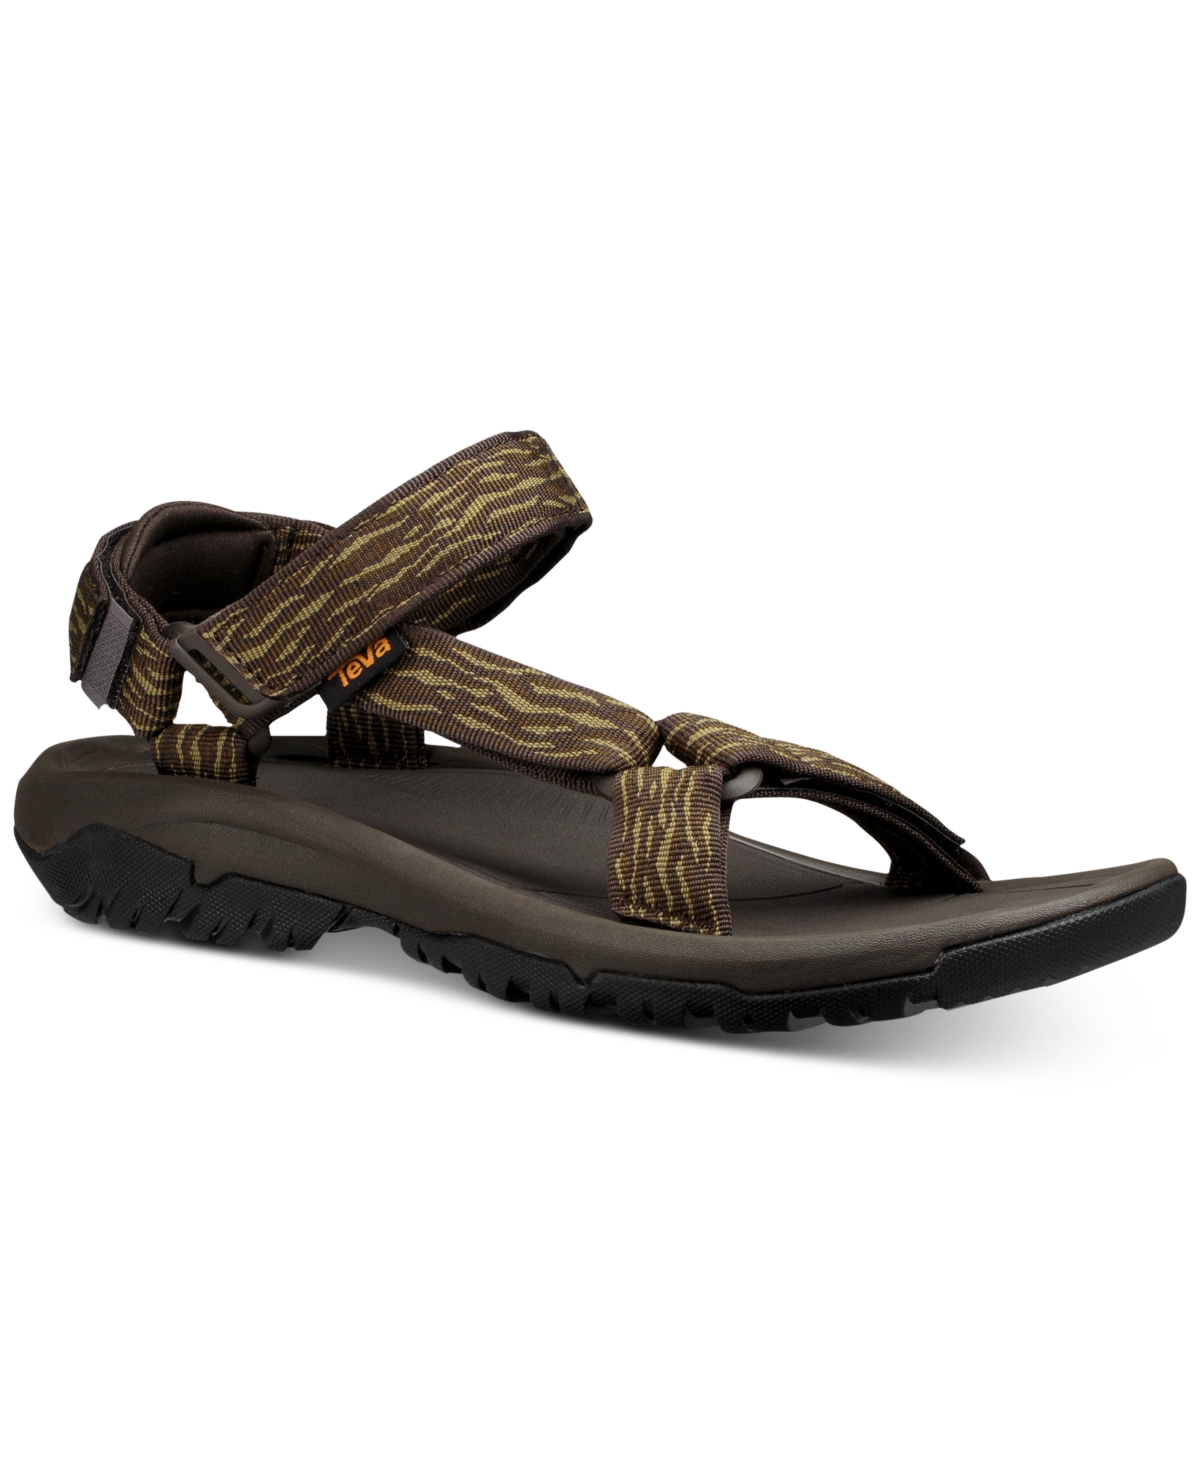 Men's Hurricane XLT2 Water-Resistant Sandals - Borderless Brown Multi